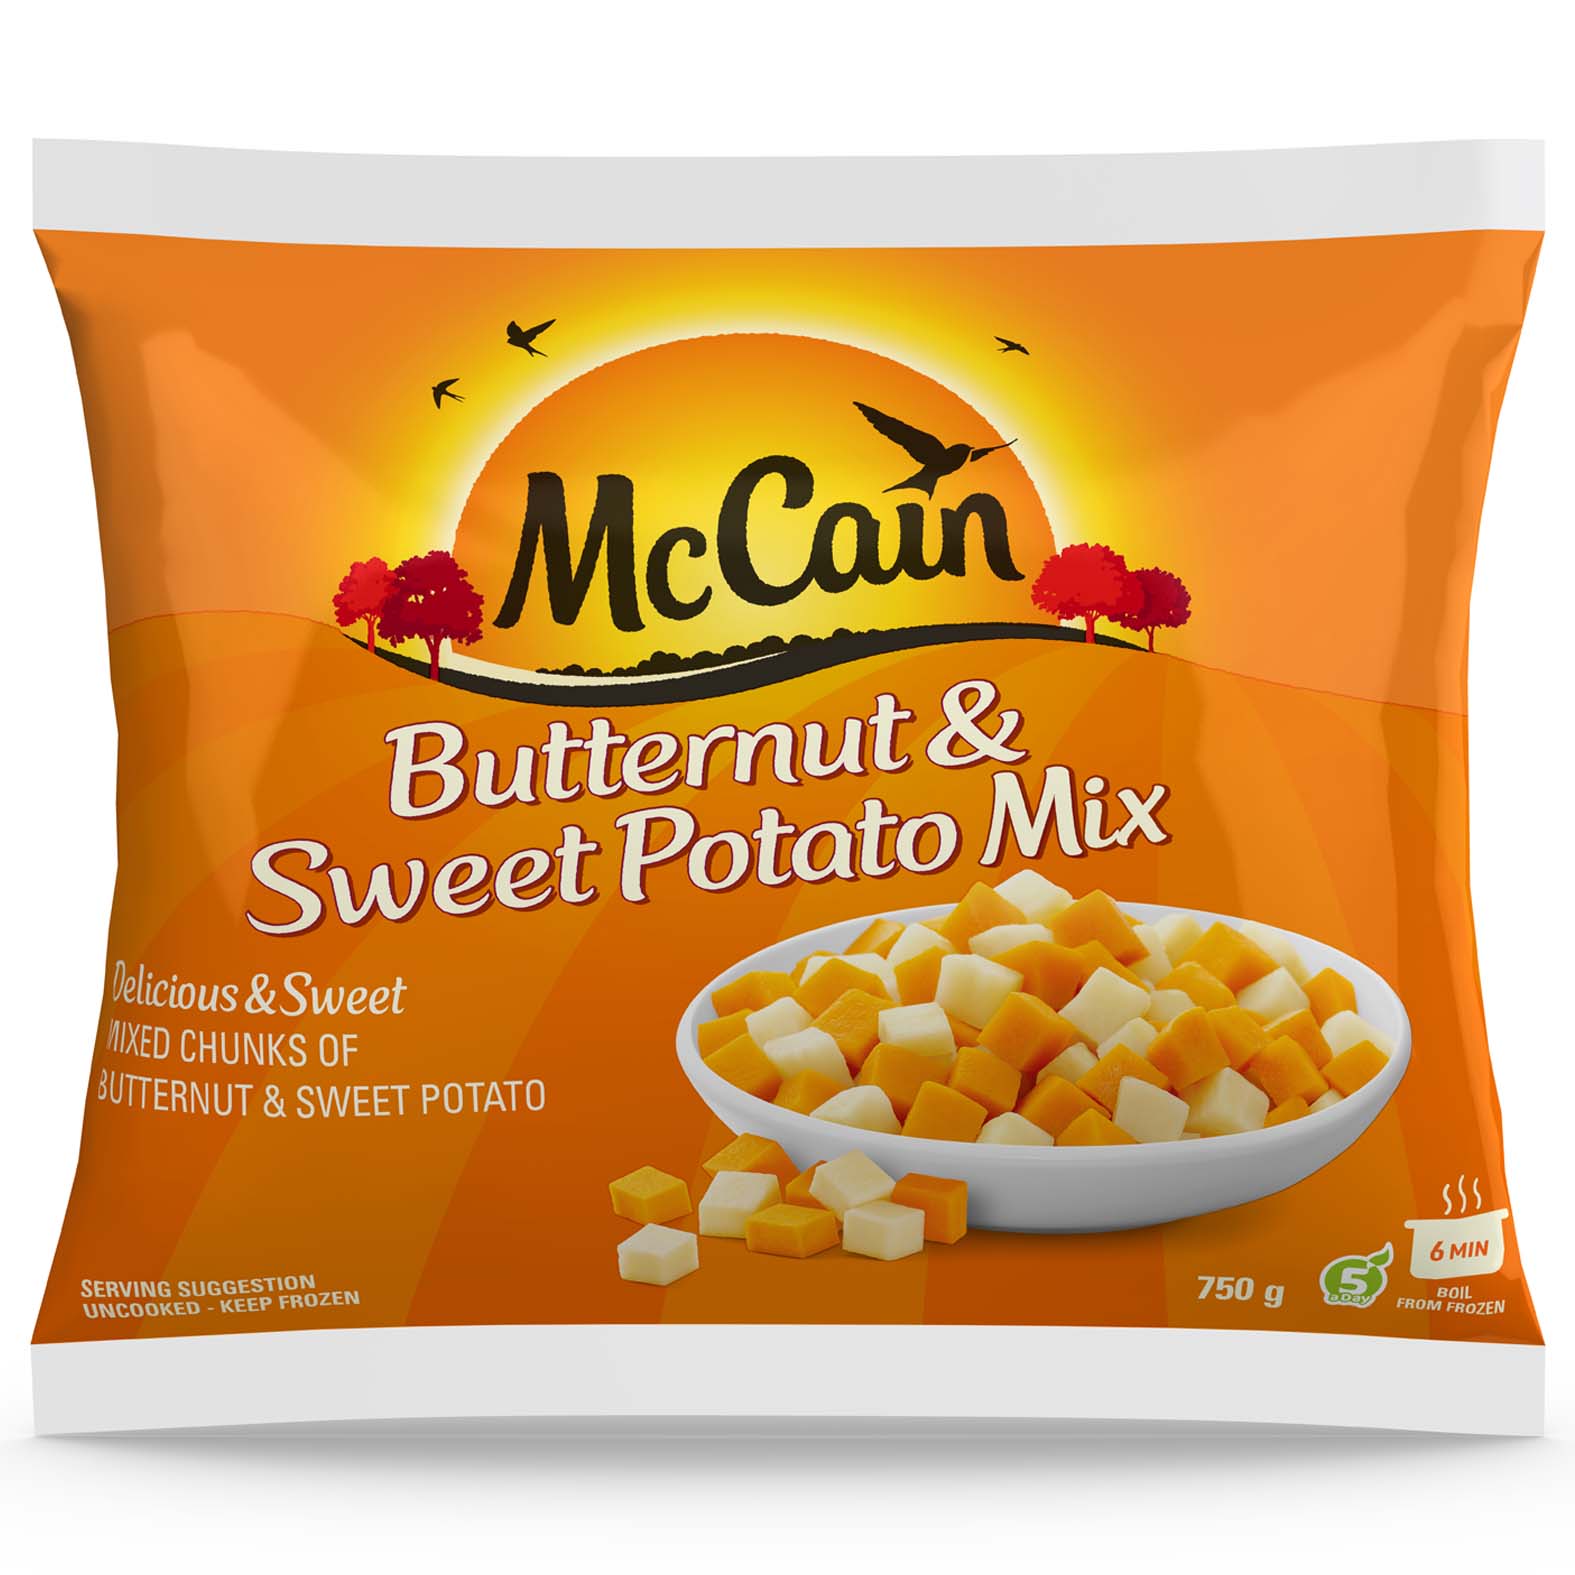 Butternut & Sweet Potato Mix 750g Pack Photo